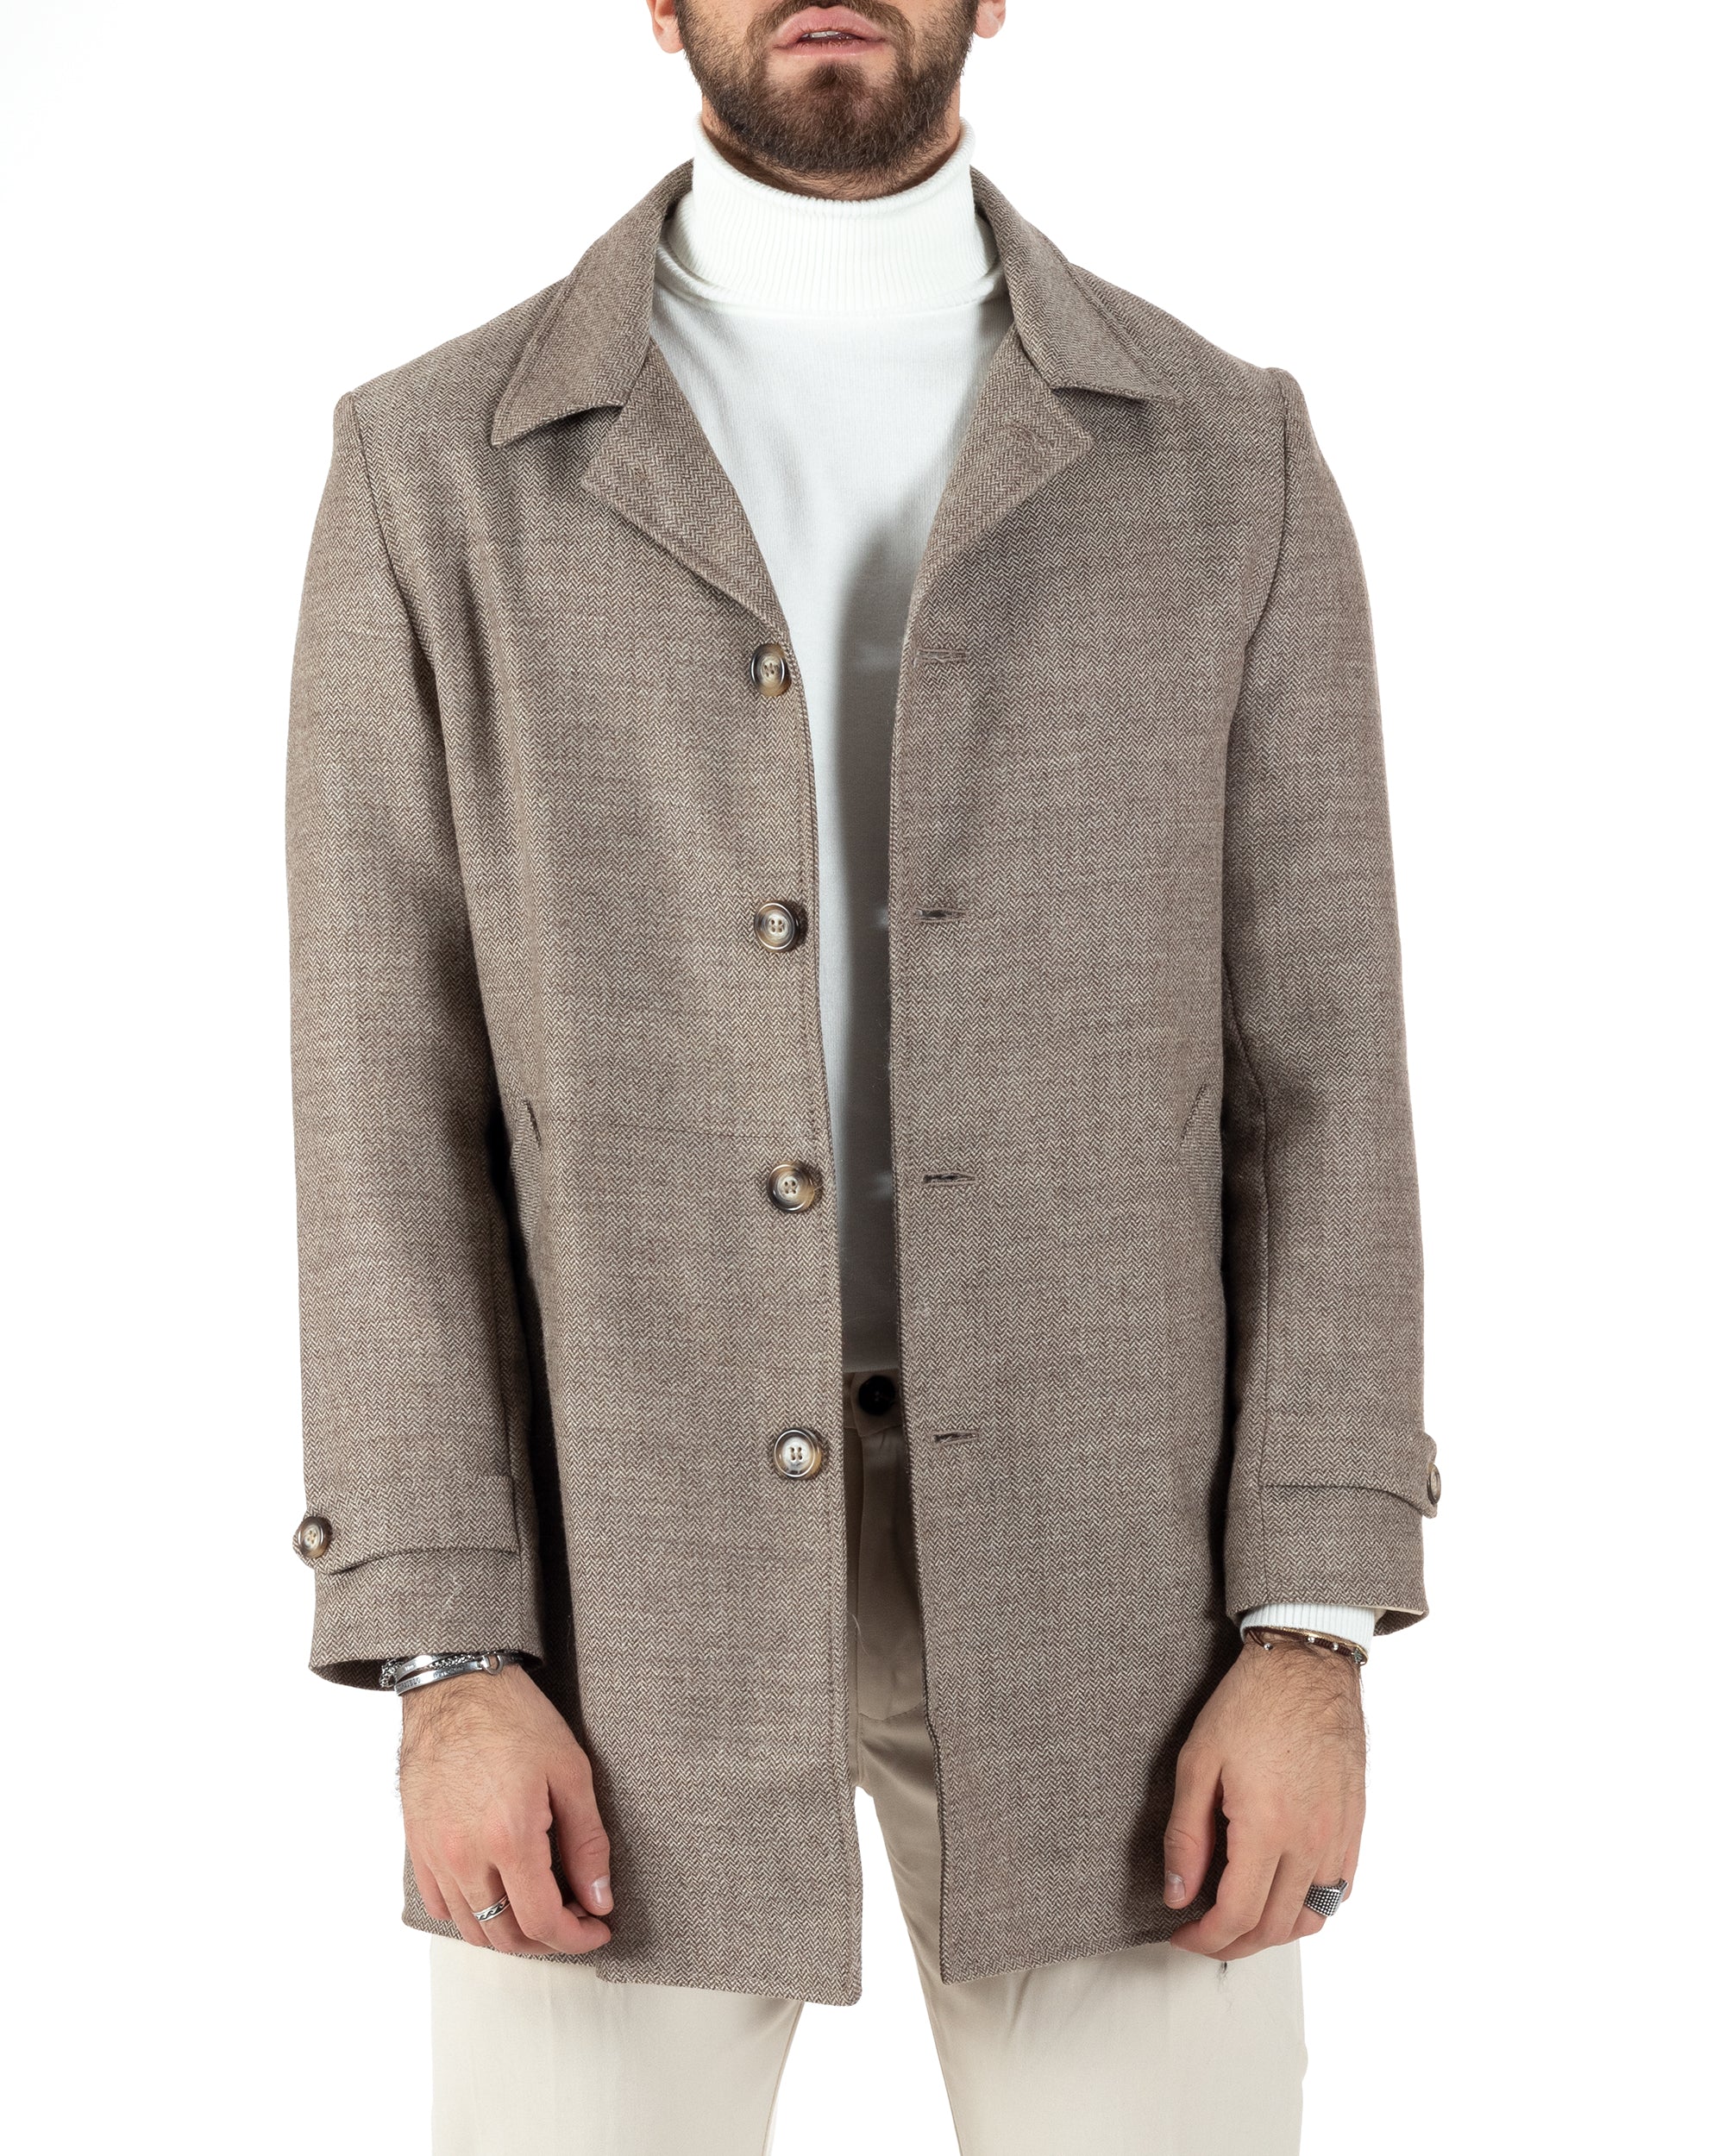 Men's Single-Breasted Jacket Coat With Dove Gray Jacket Collar Elegant Casual Baronet Jacket GIOSAL-G2998A